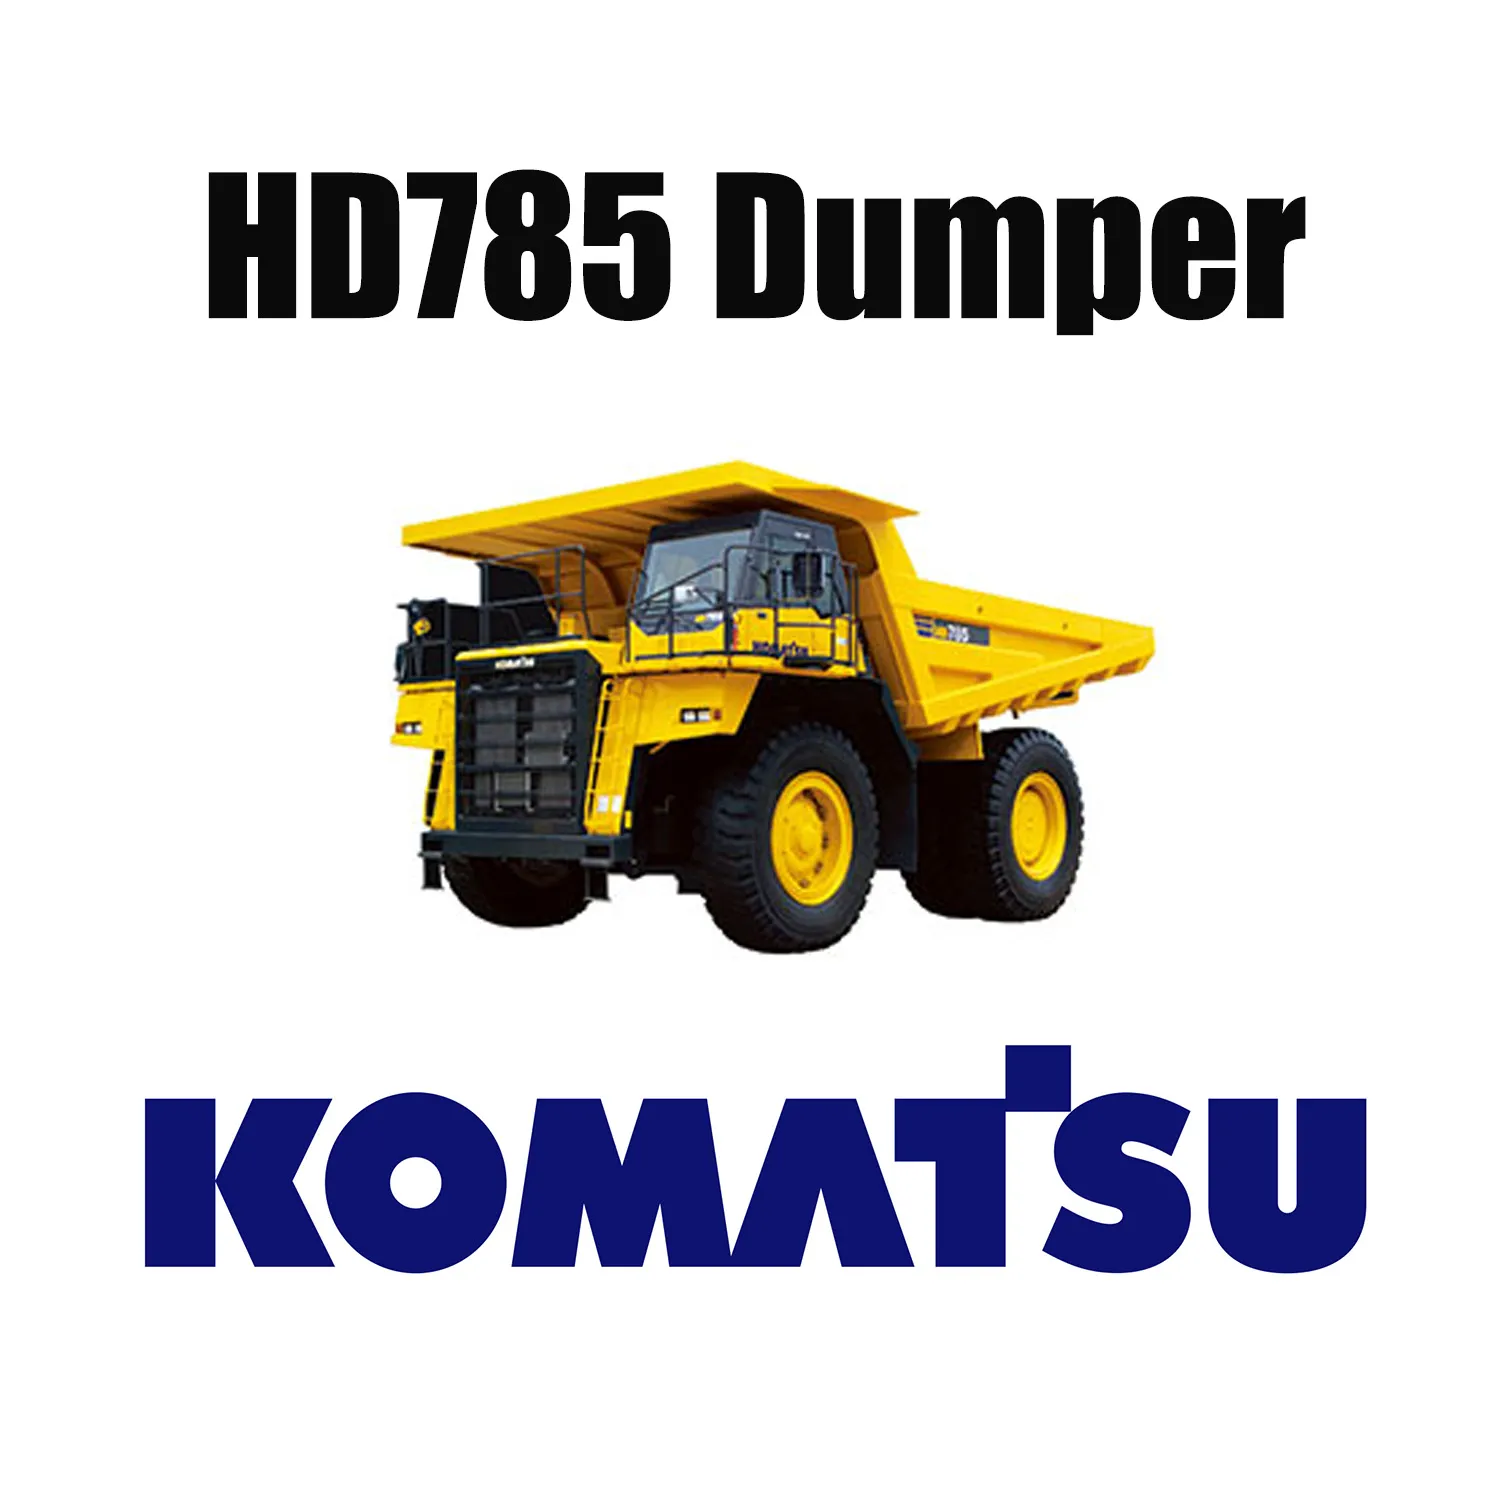 Шины OTR 27.00R49 Tough Mining Specialty для самосвала KOMATSU HD785